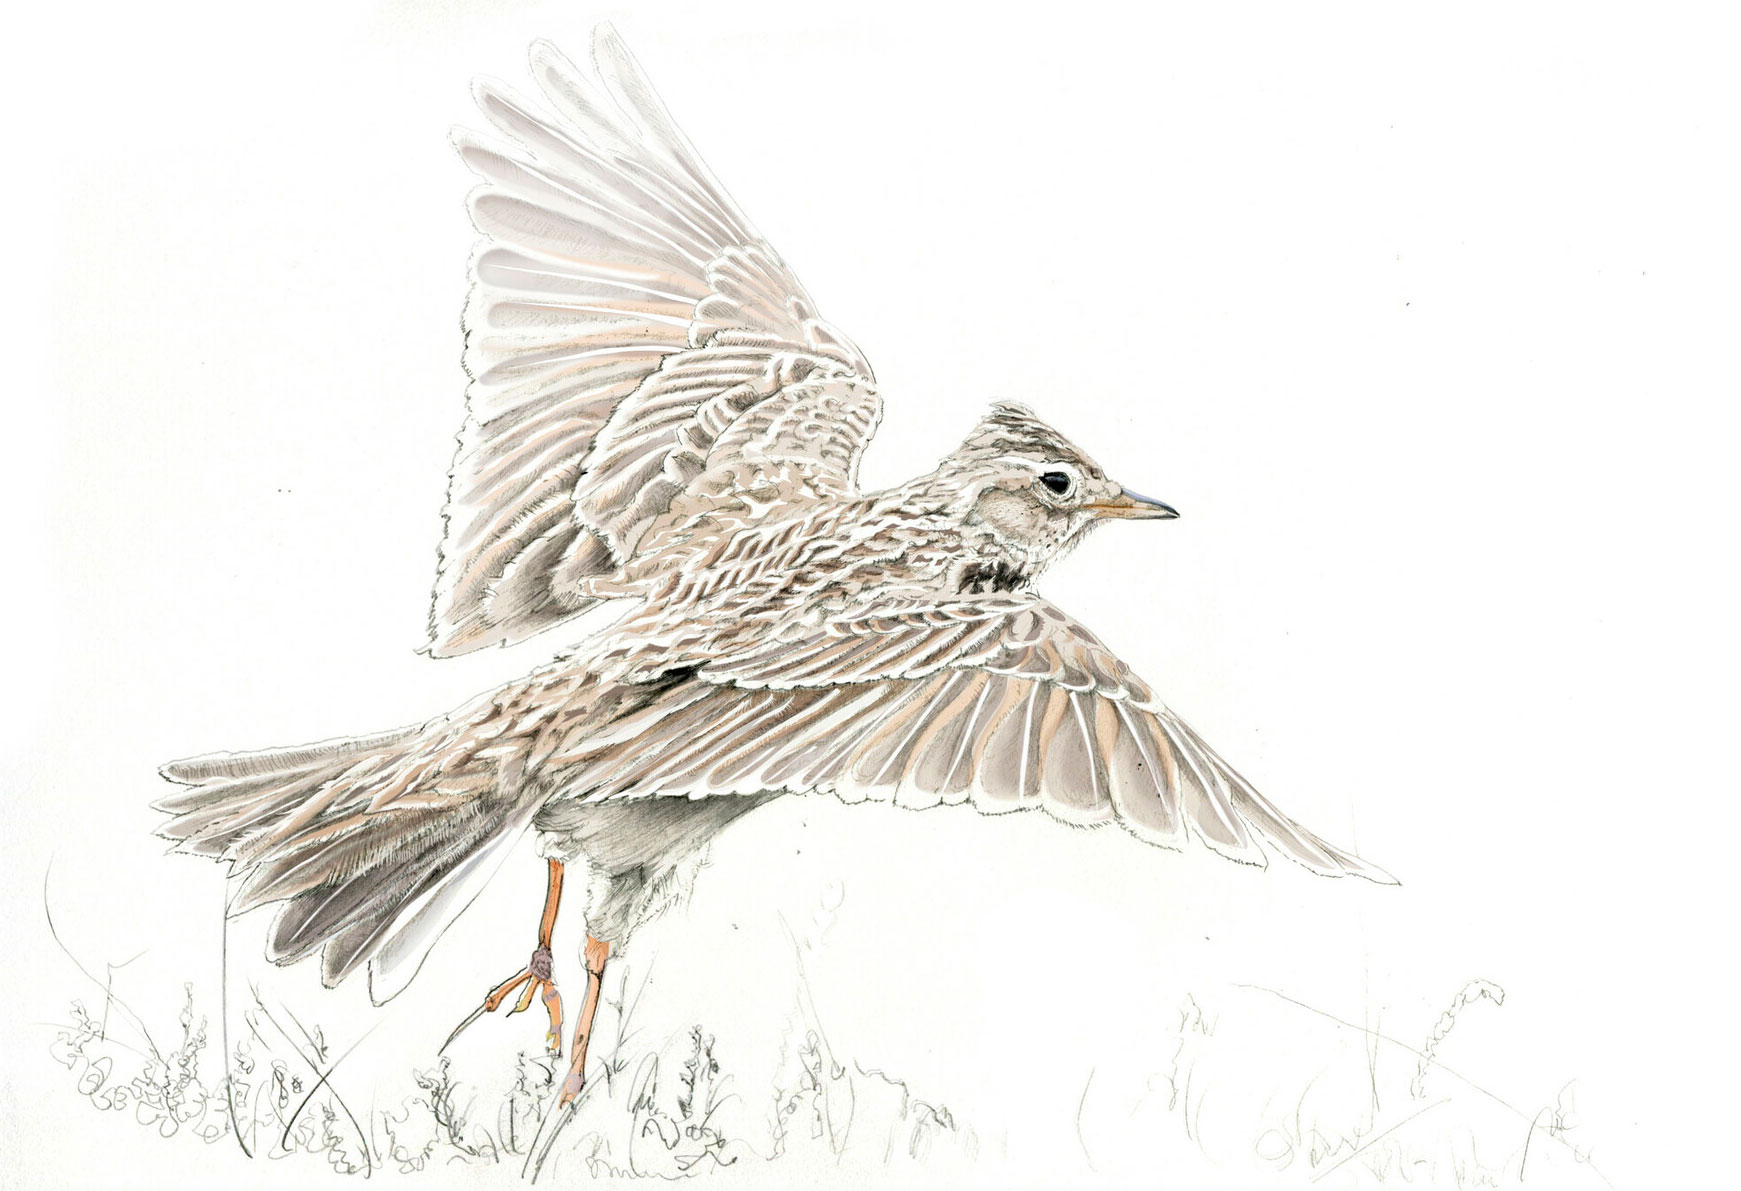 Skylark illustration by Nick Ellwood.